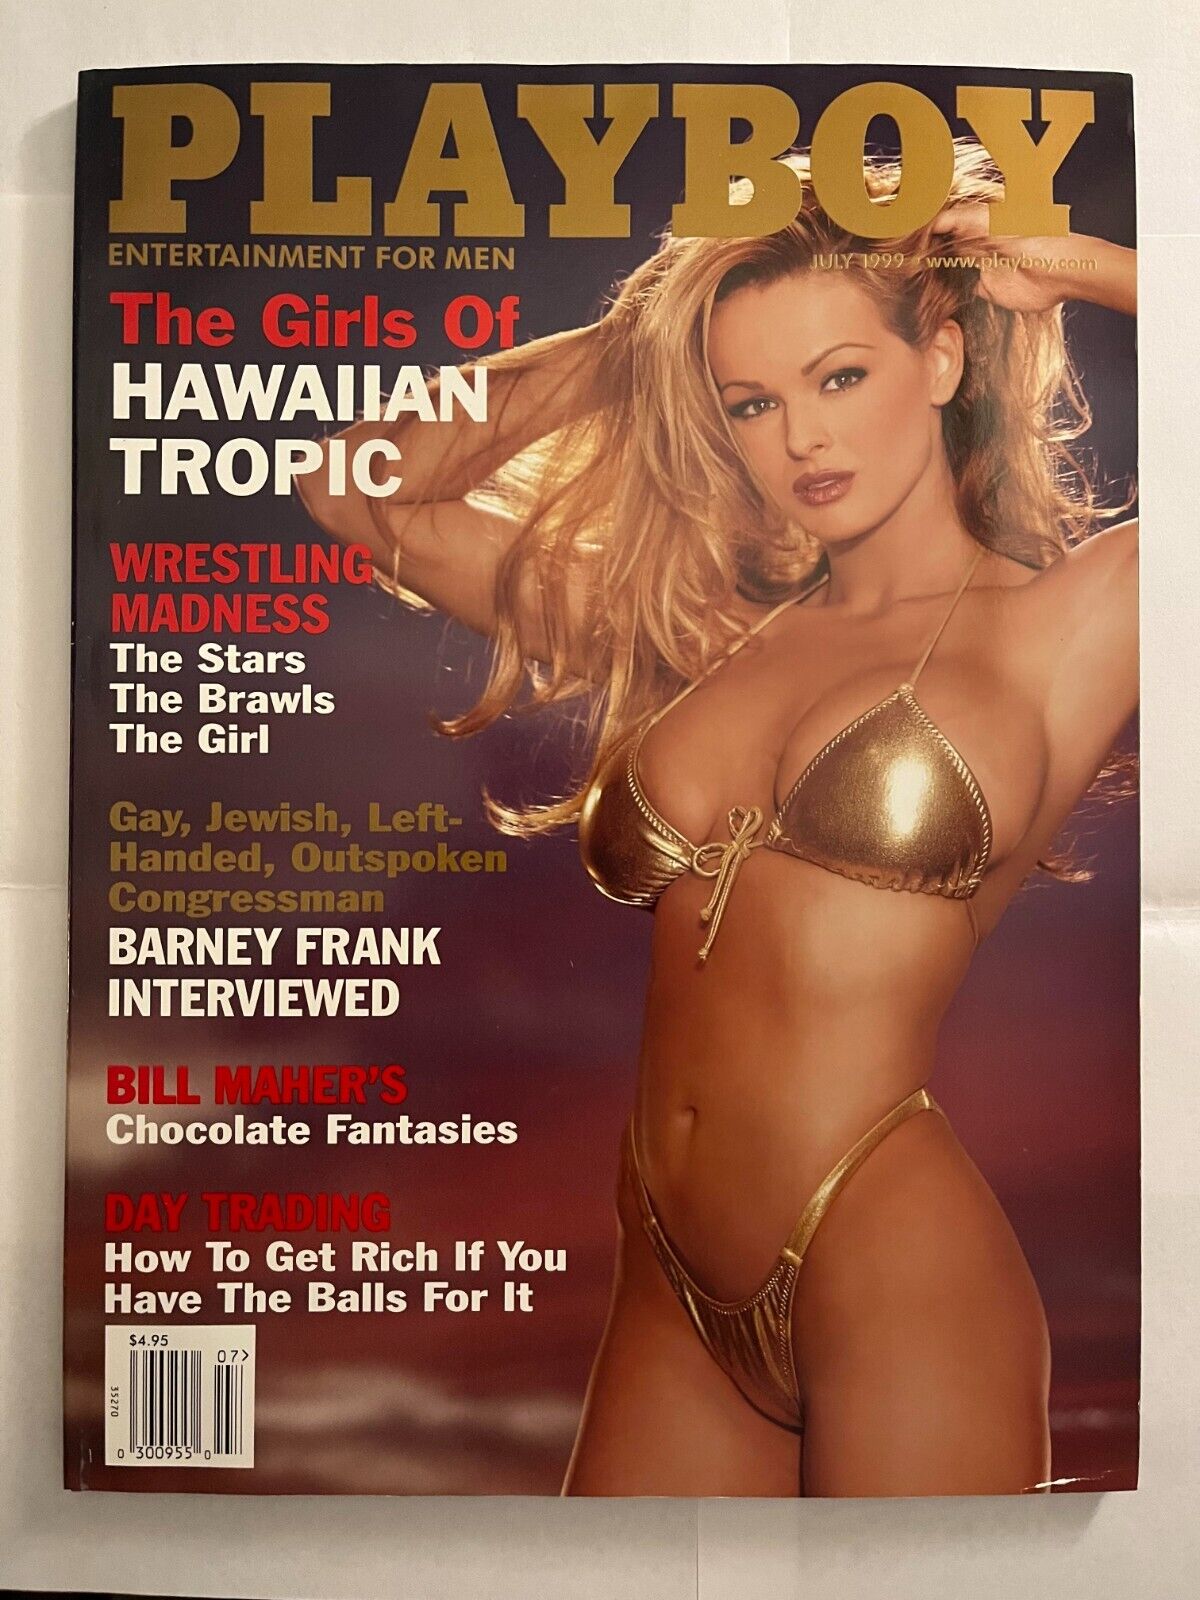 Playboy Magazine 1980's - 2000's Pick Your Issue, Single Magazine